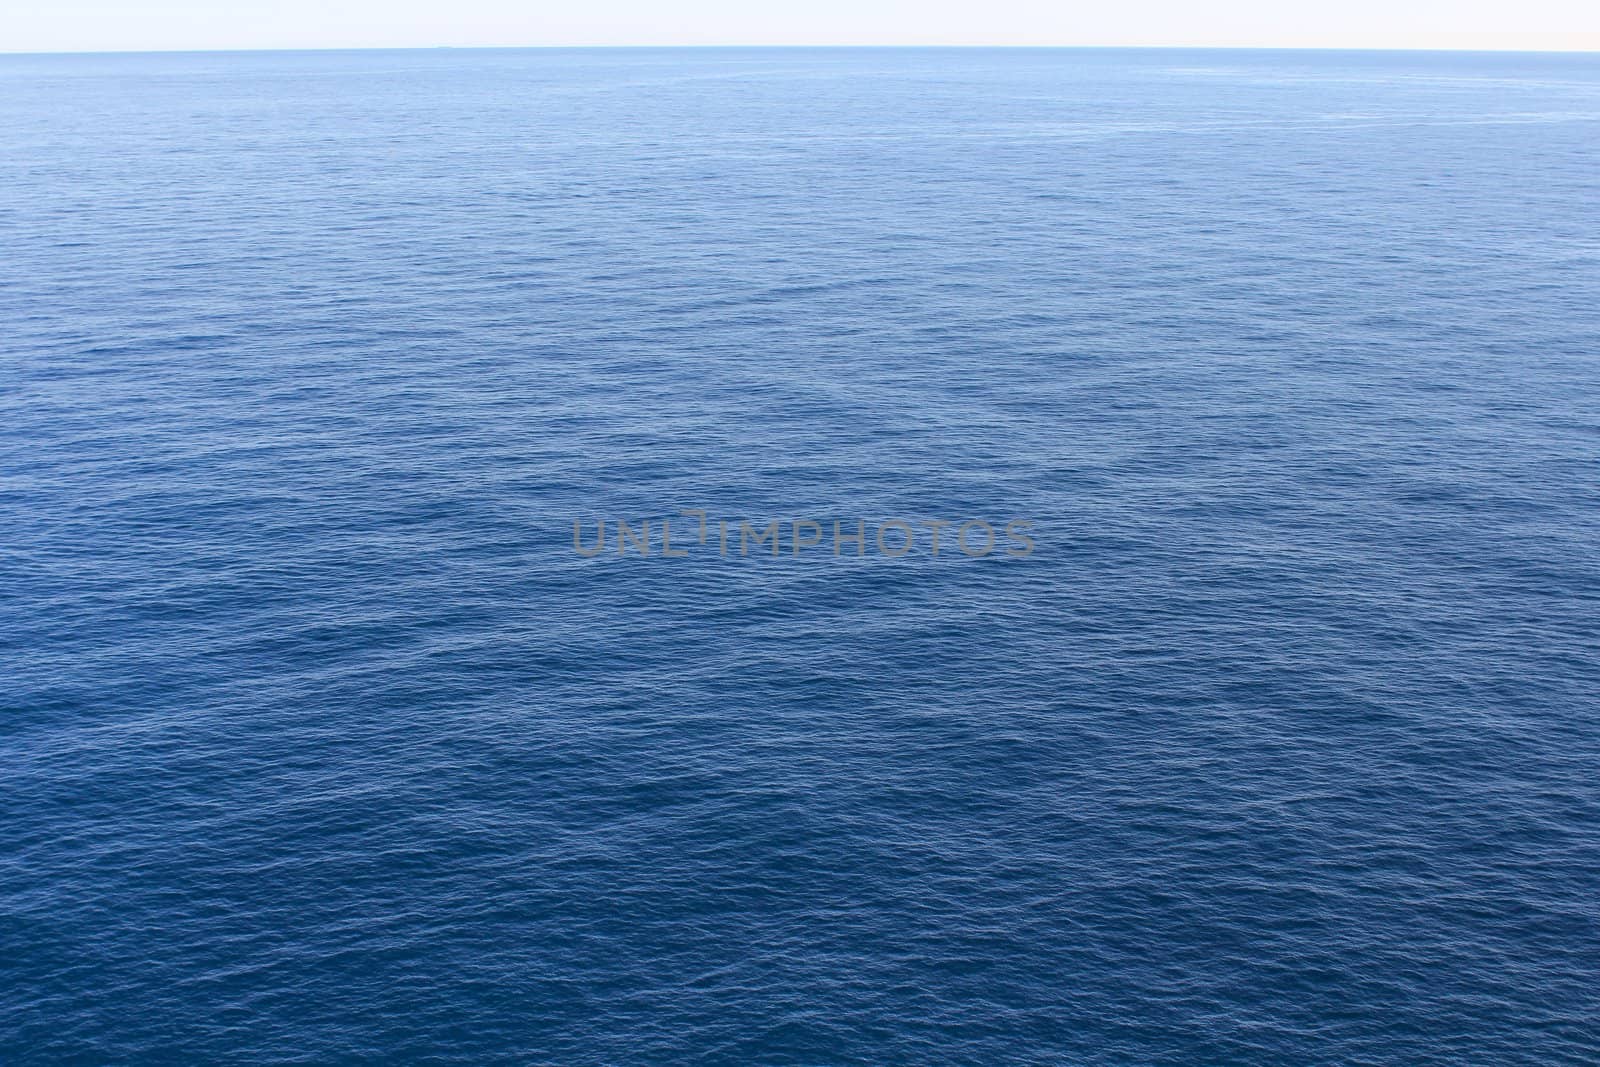 Blue Water in the Mediterranean See